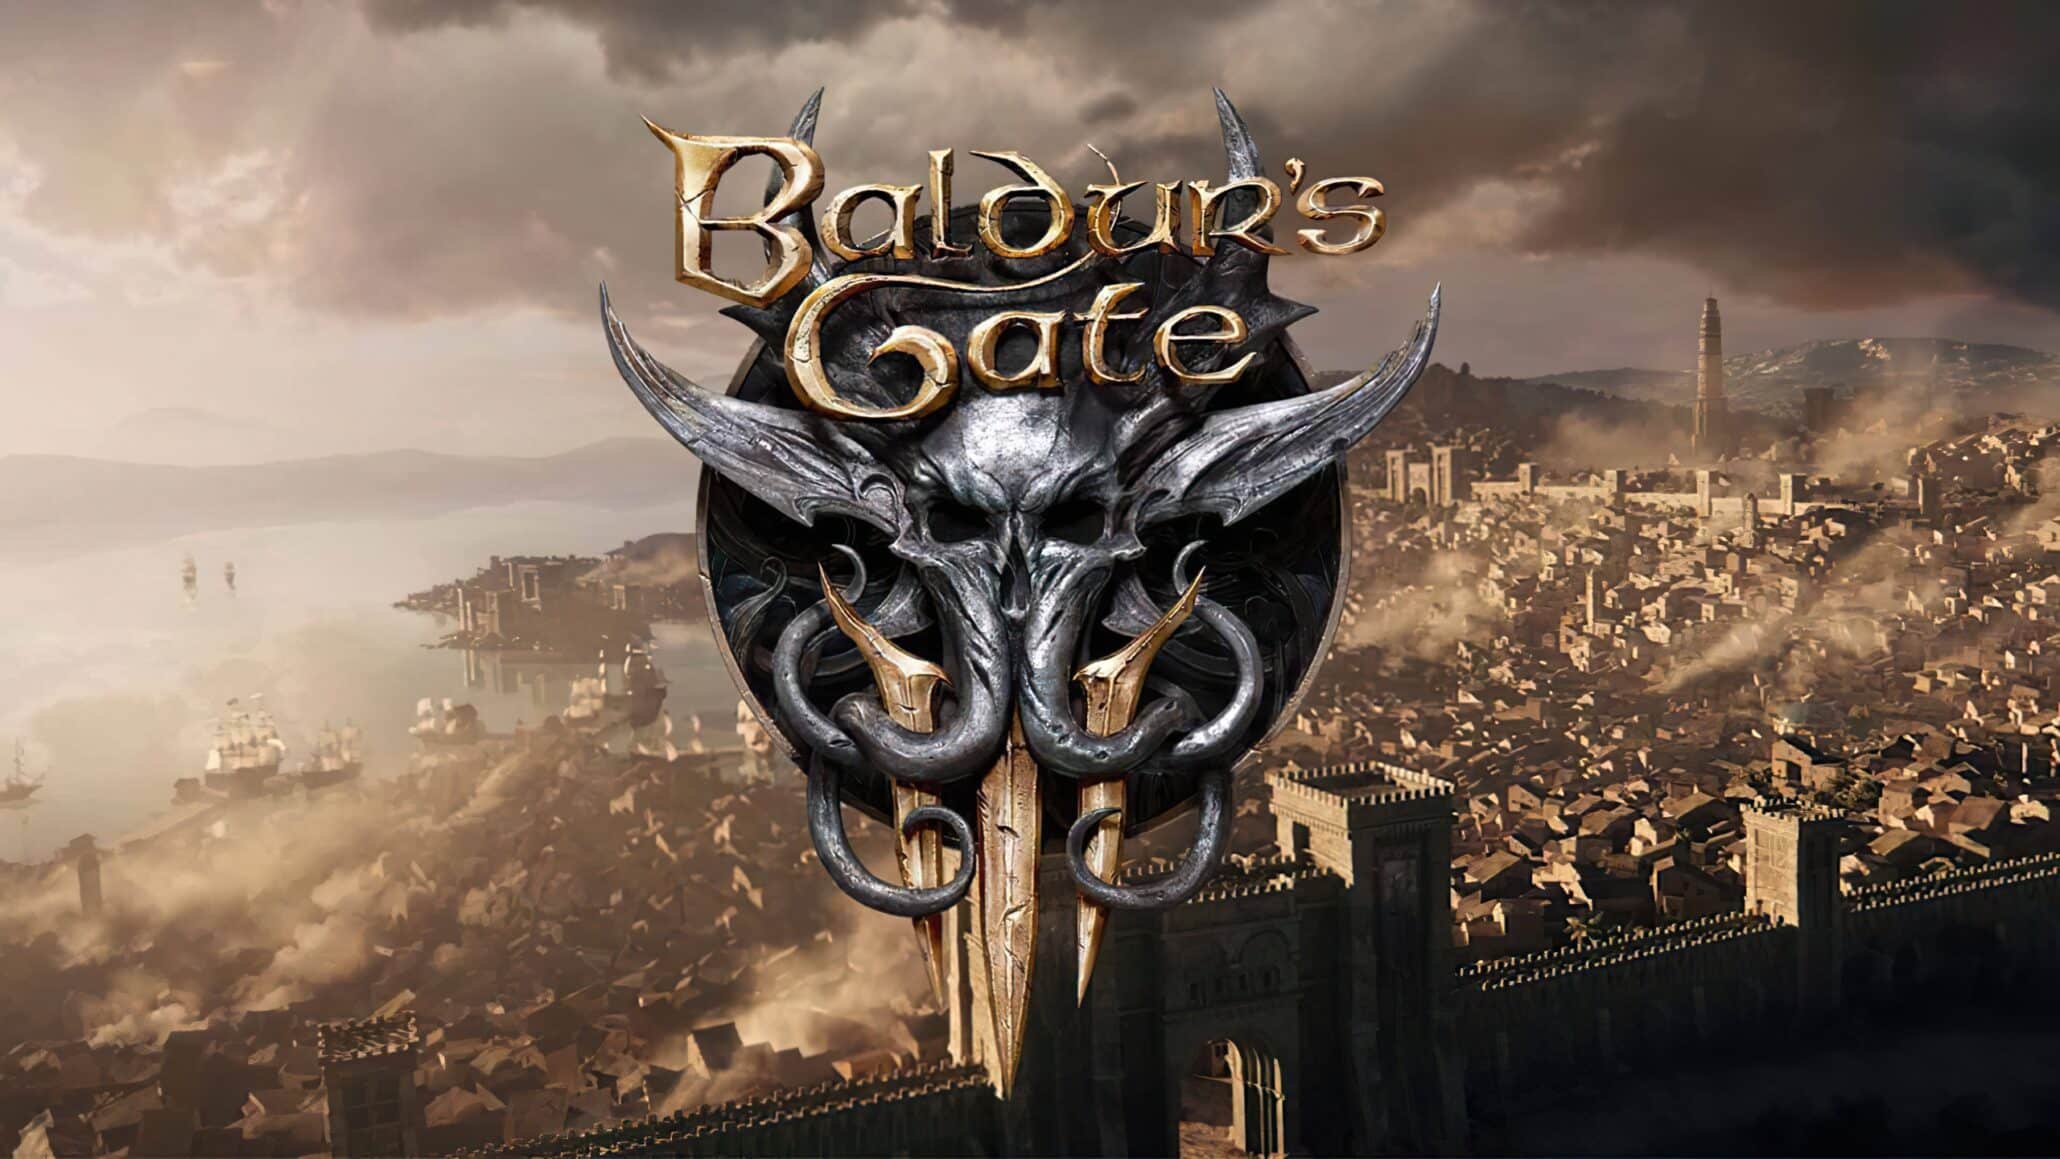 Baldur’s Gate 3